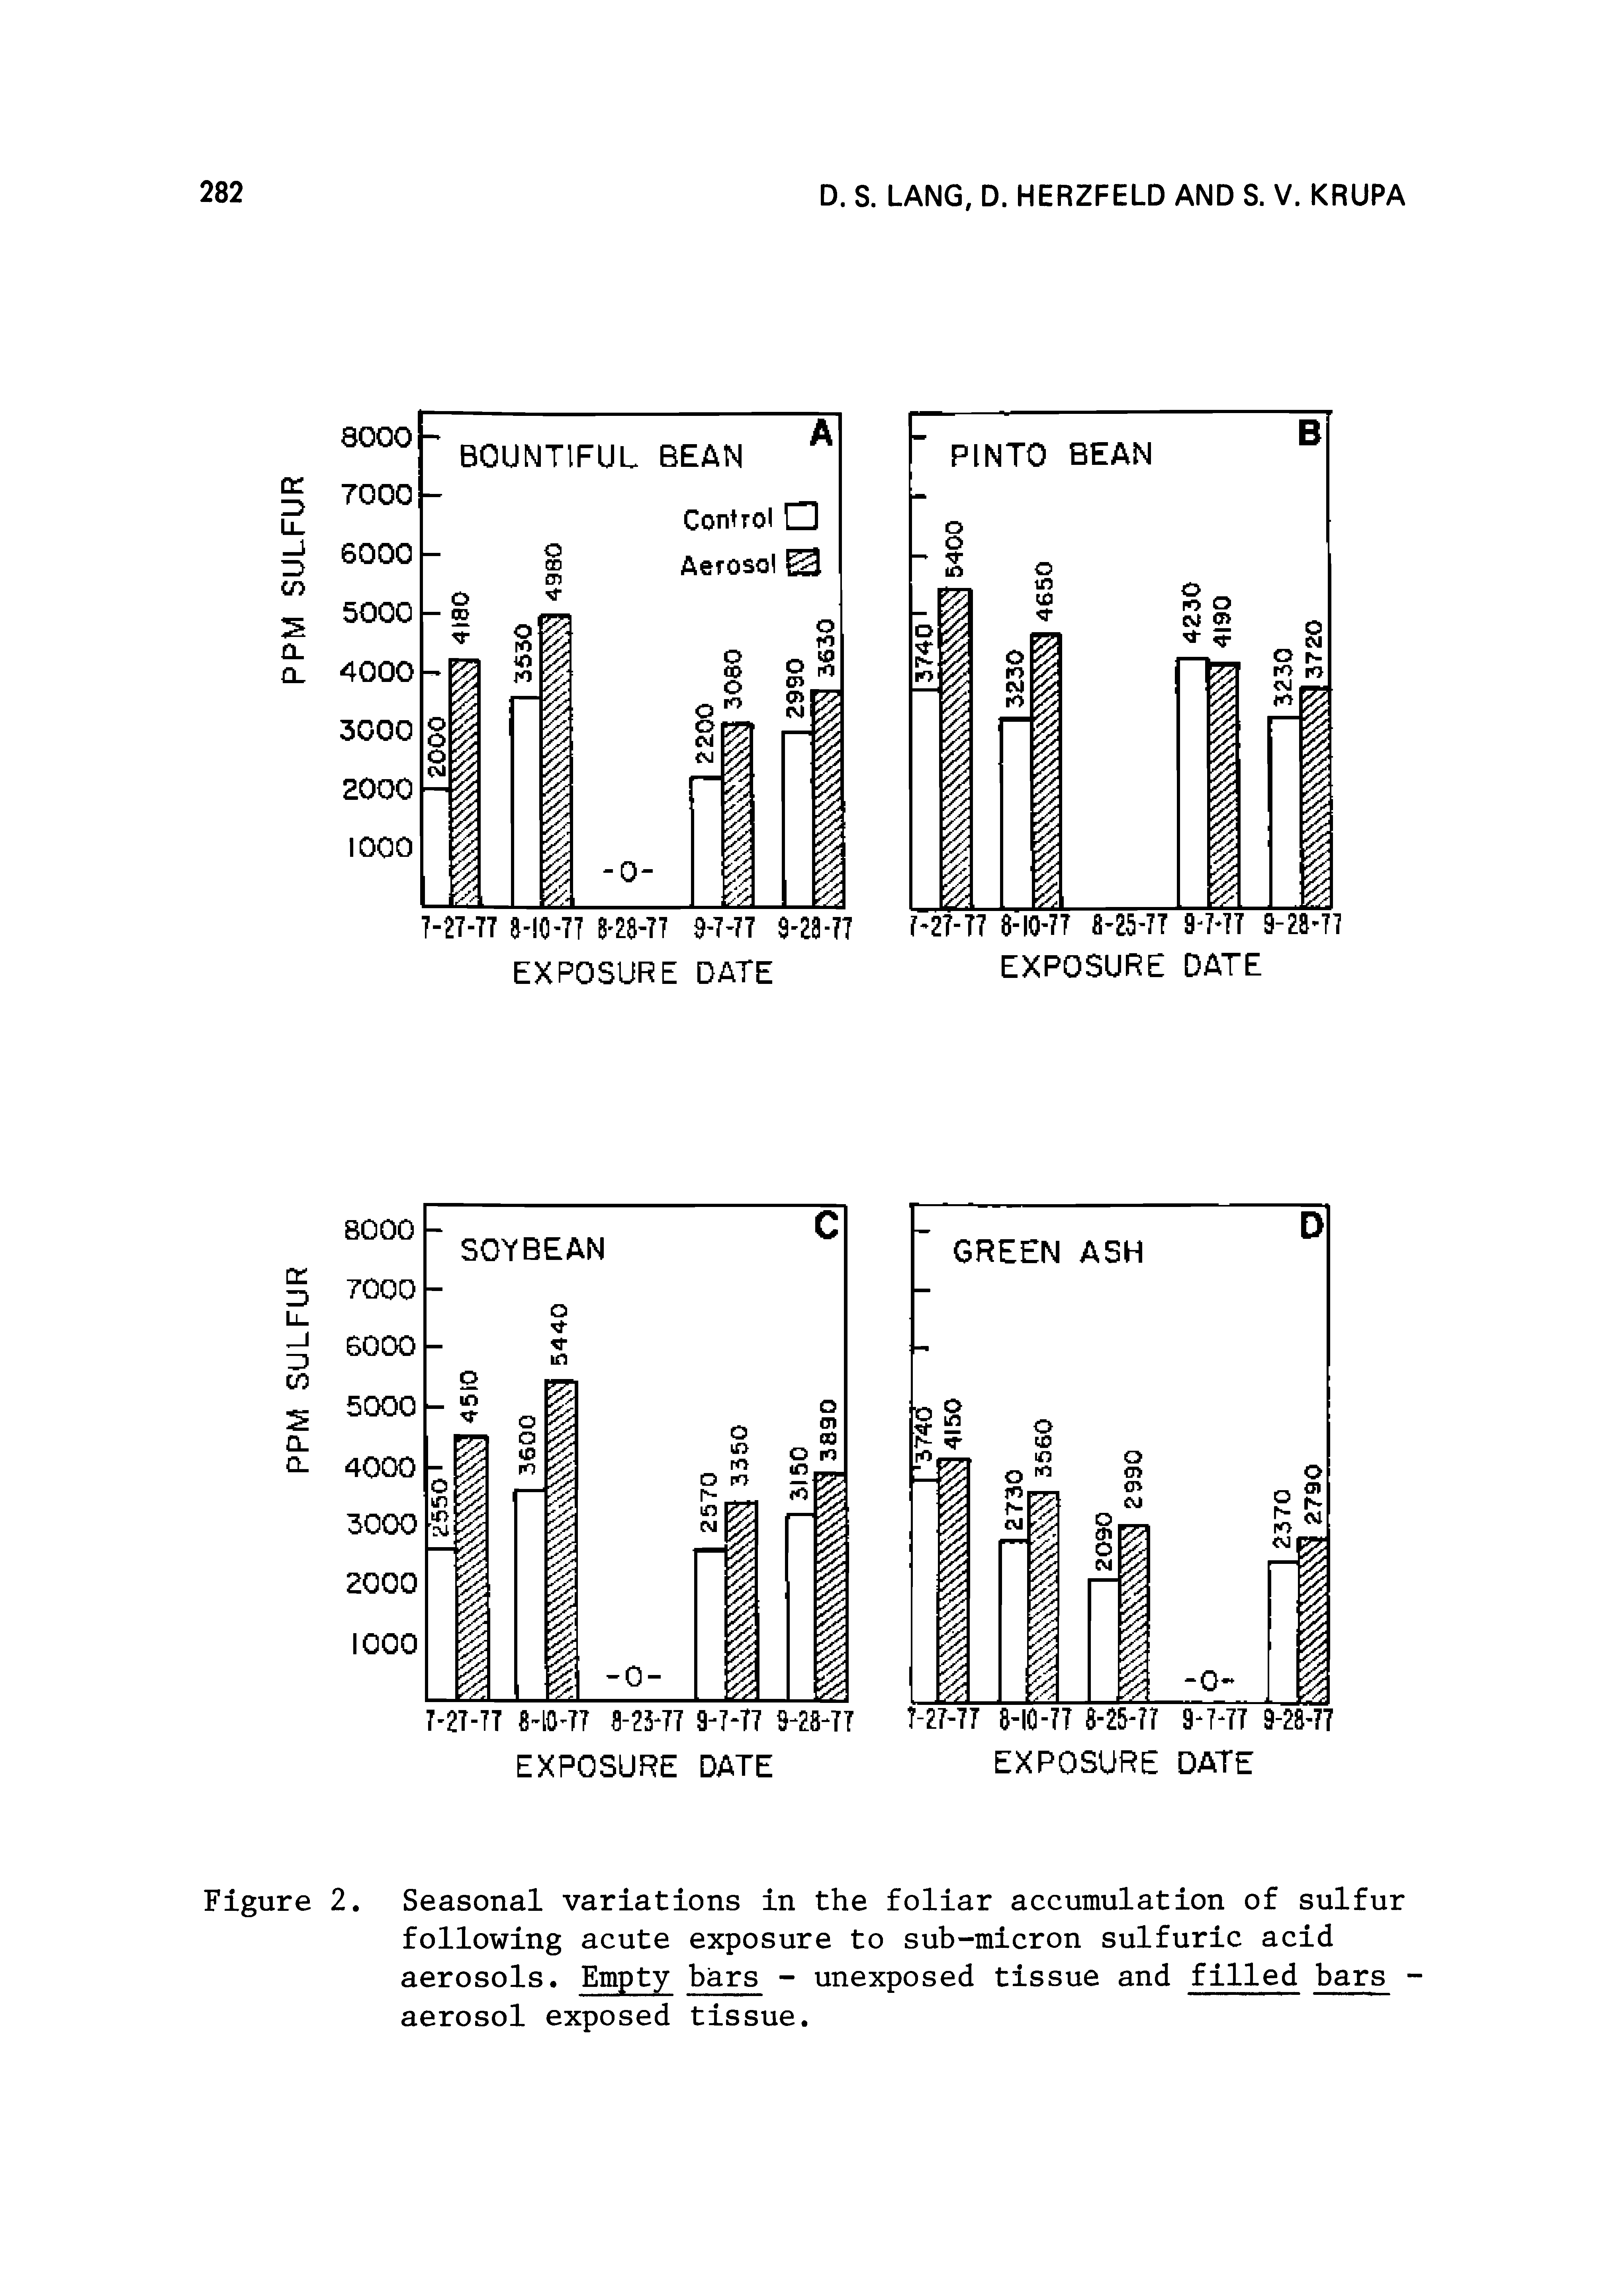 Figure 2. Seasonal variations in the foliar accumulation of sulfur following acute exposure to sub-micron sulfuric acid aerosols. Empty bars - unexposed tissue and filled bars -aerosol exposed tissue.